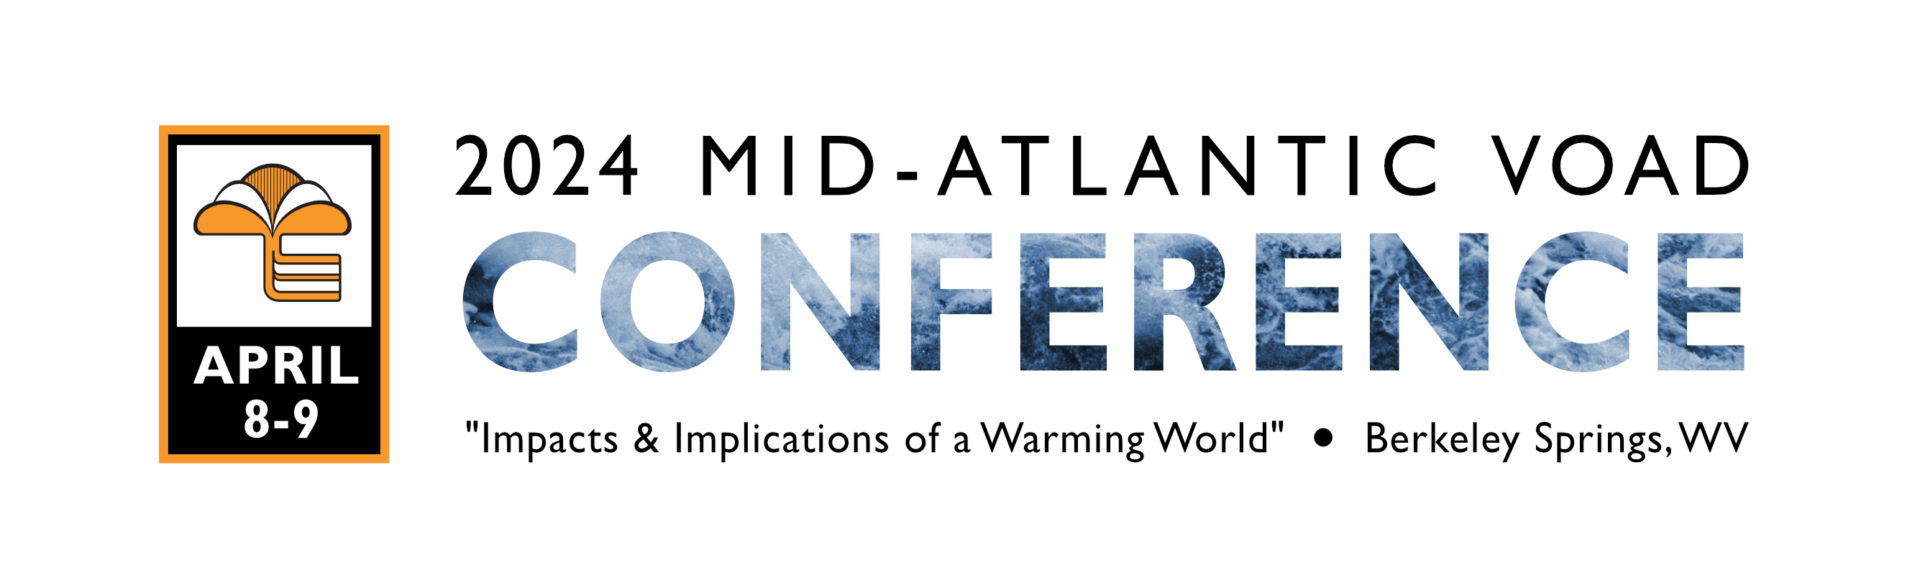 Mid-Atlantic VOAD Conference logo